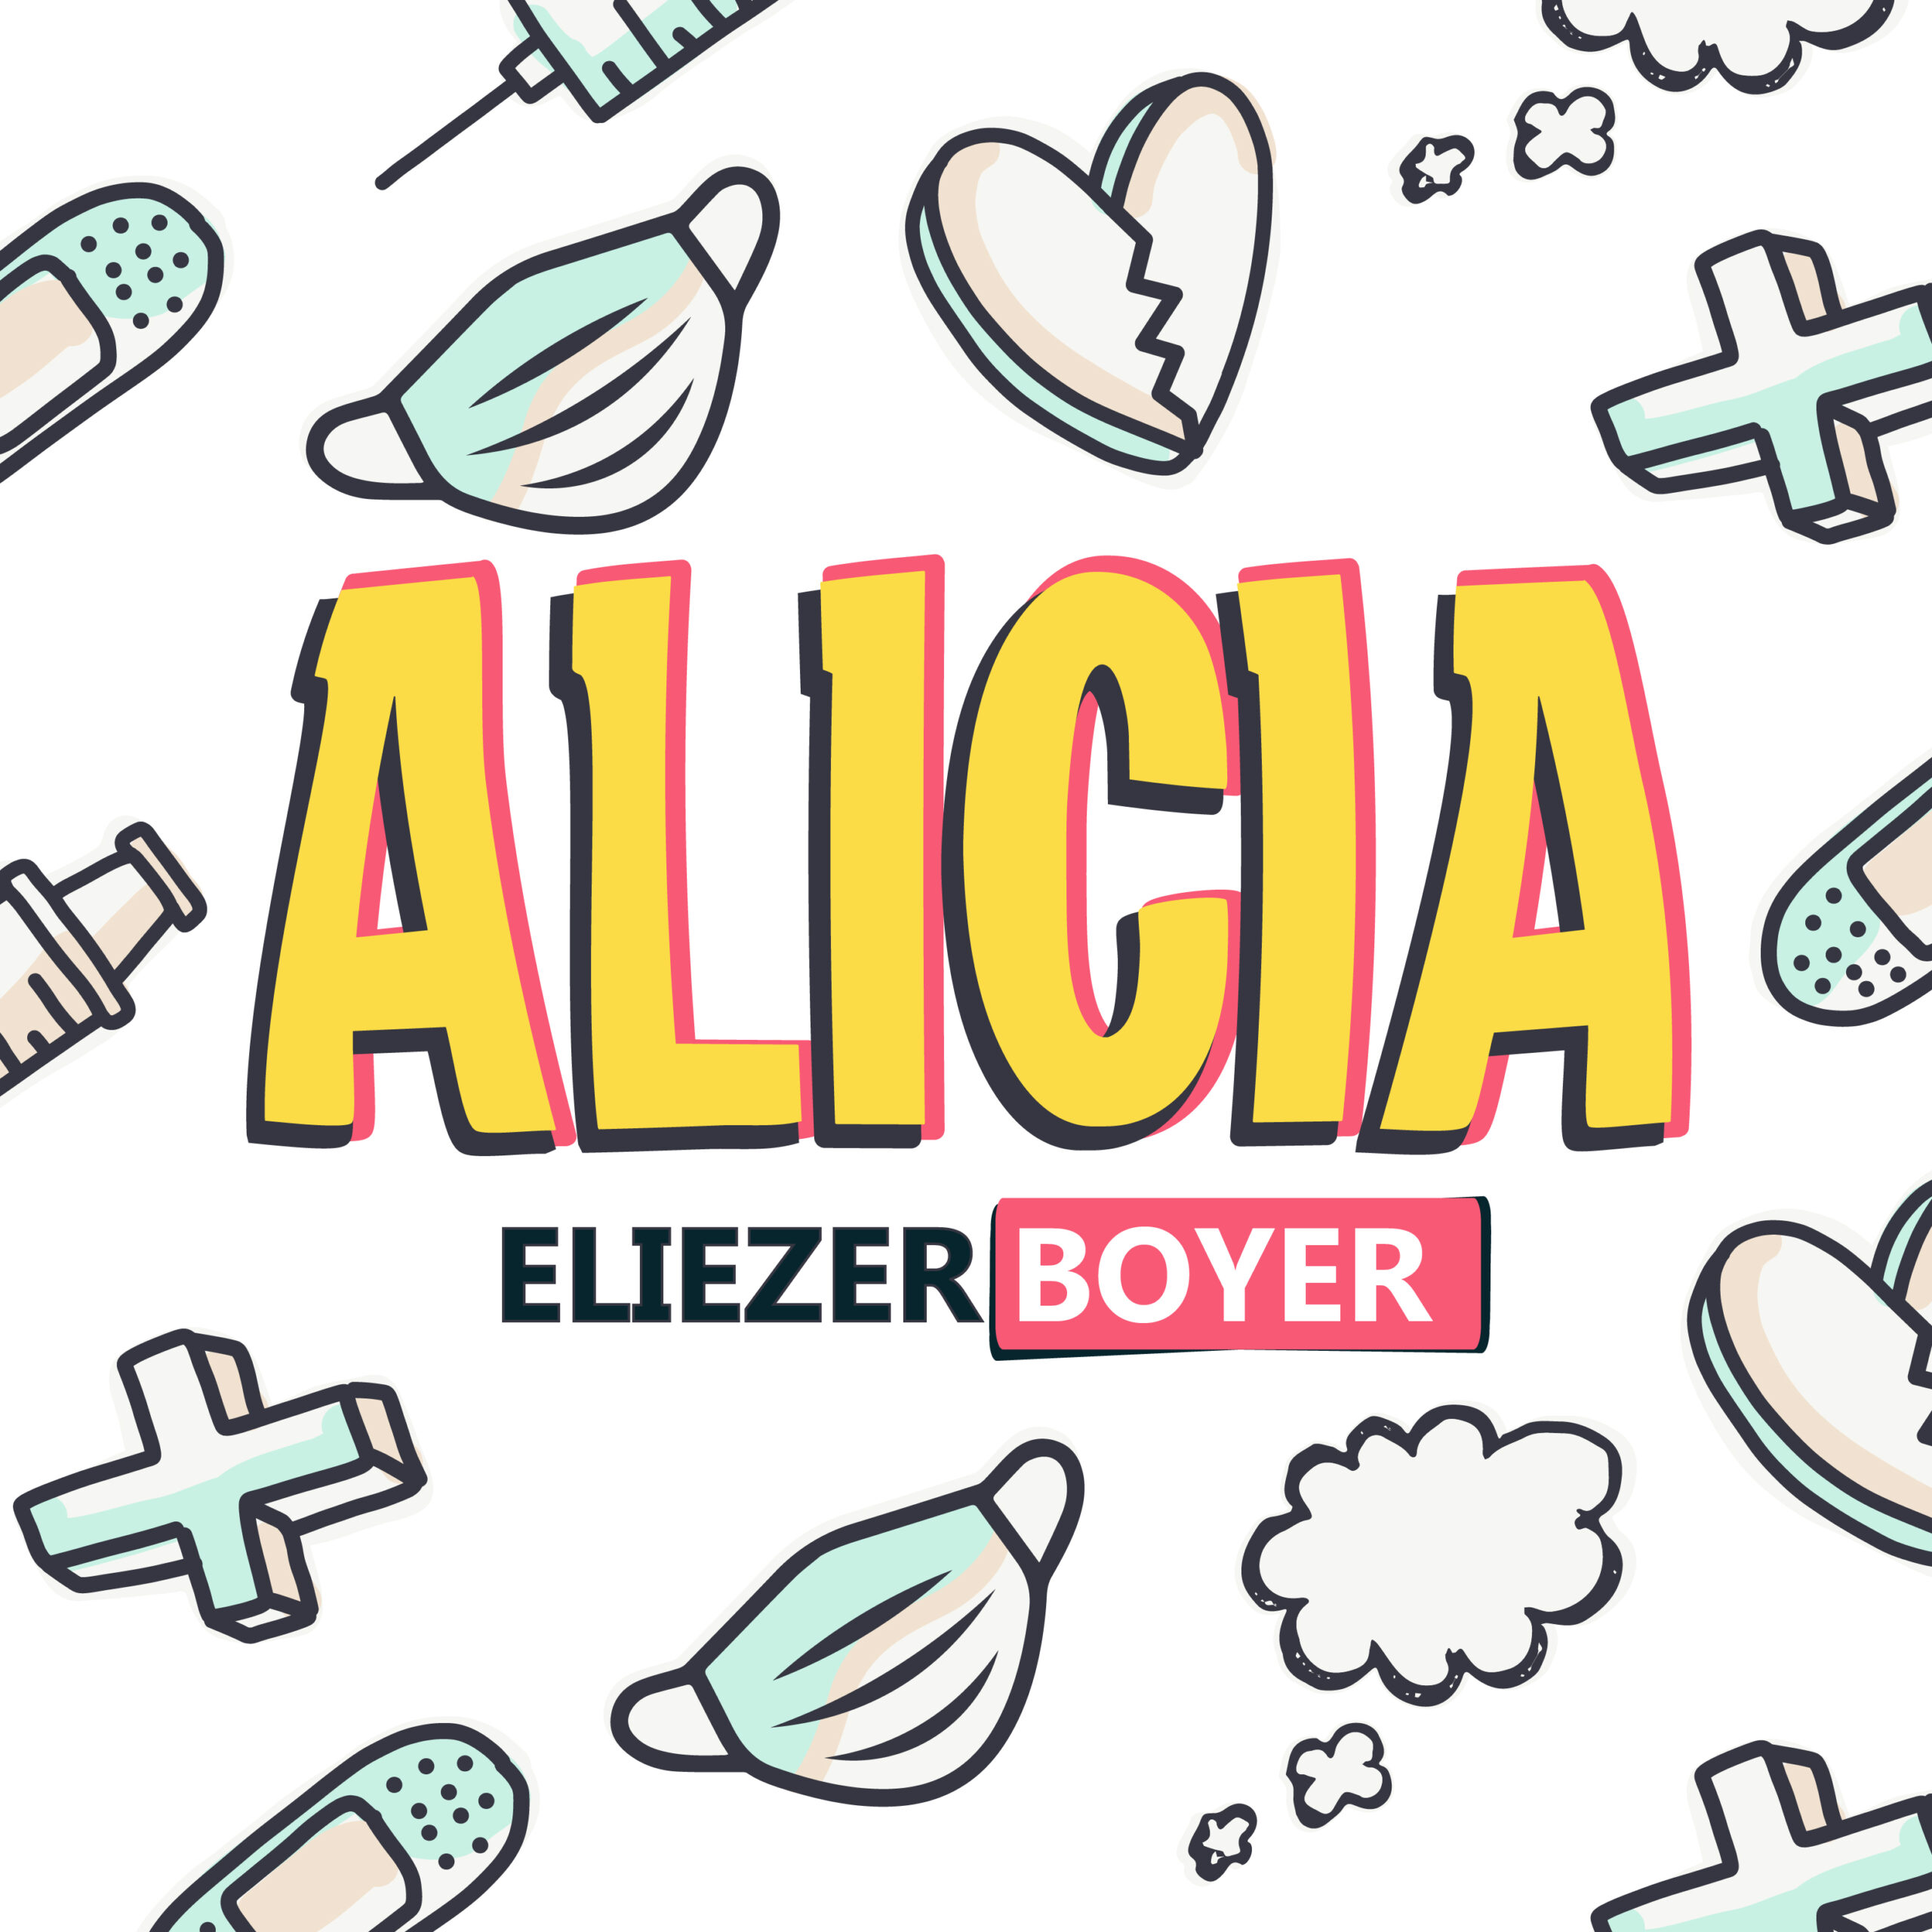 Eliezer Boyer Alicia